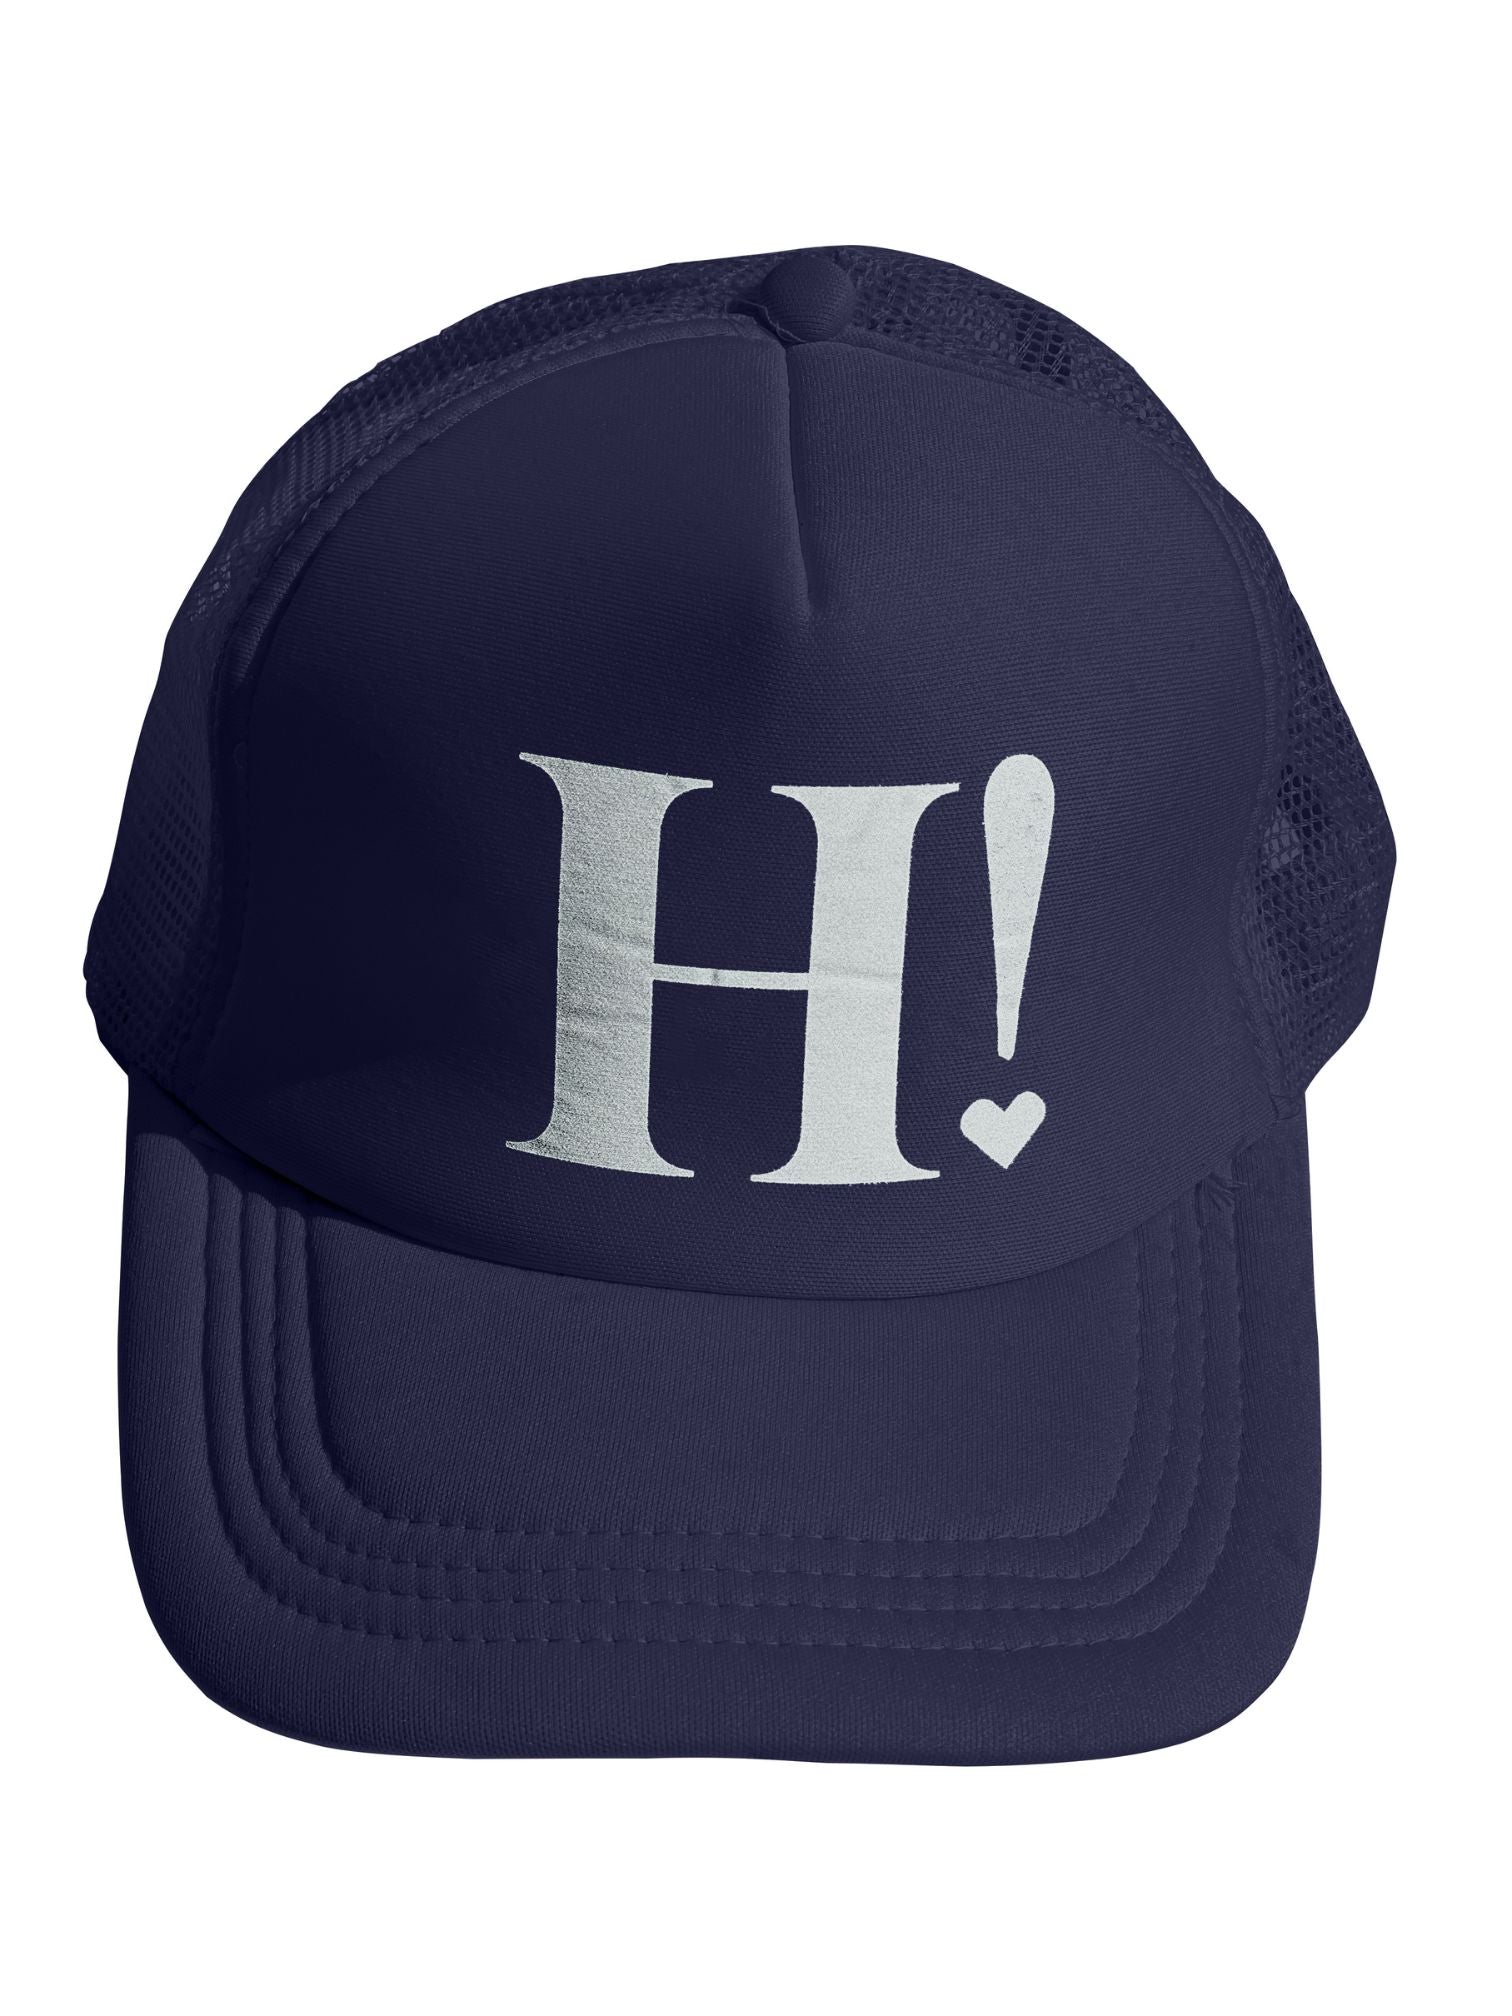 navy blue baseball cap with silver "Hi"